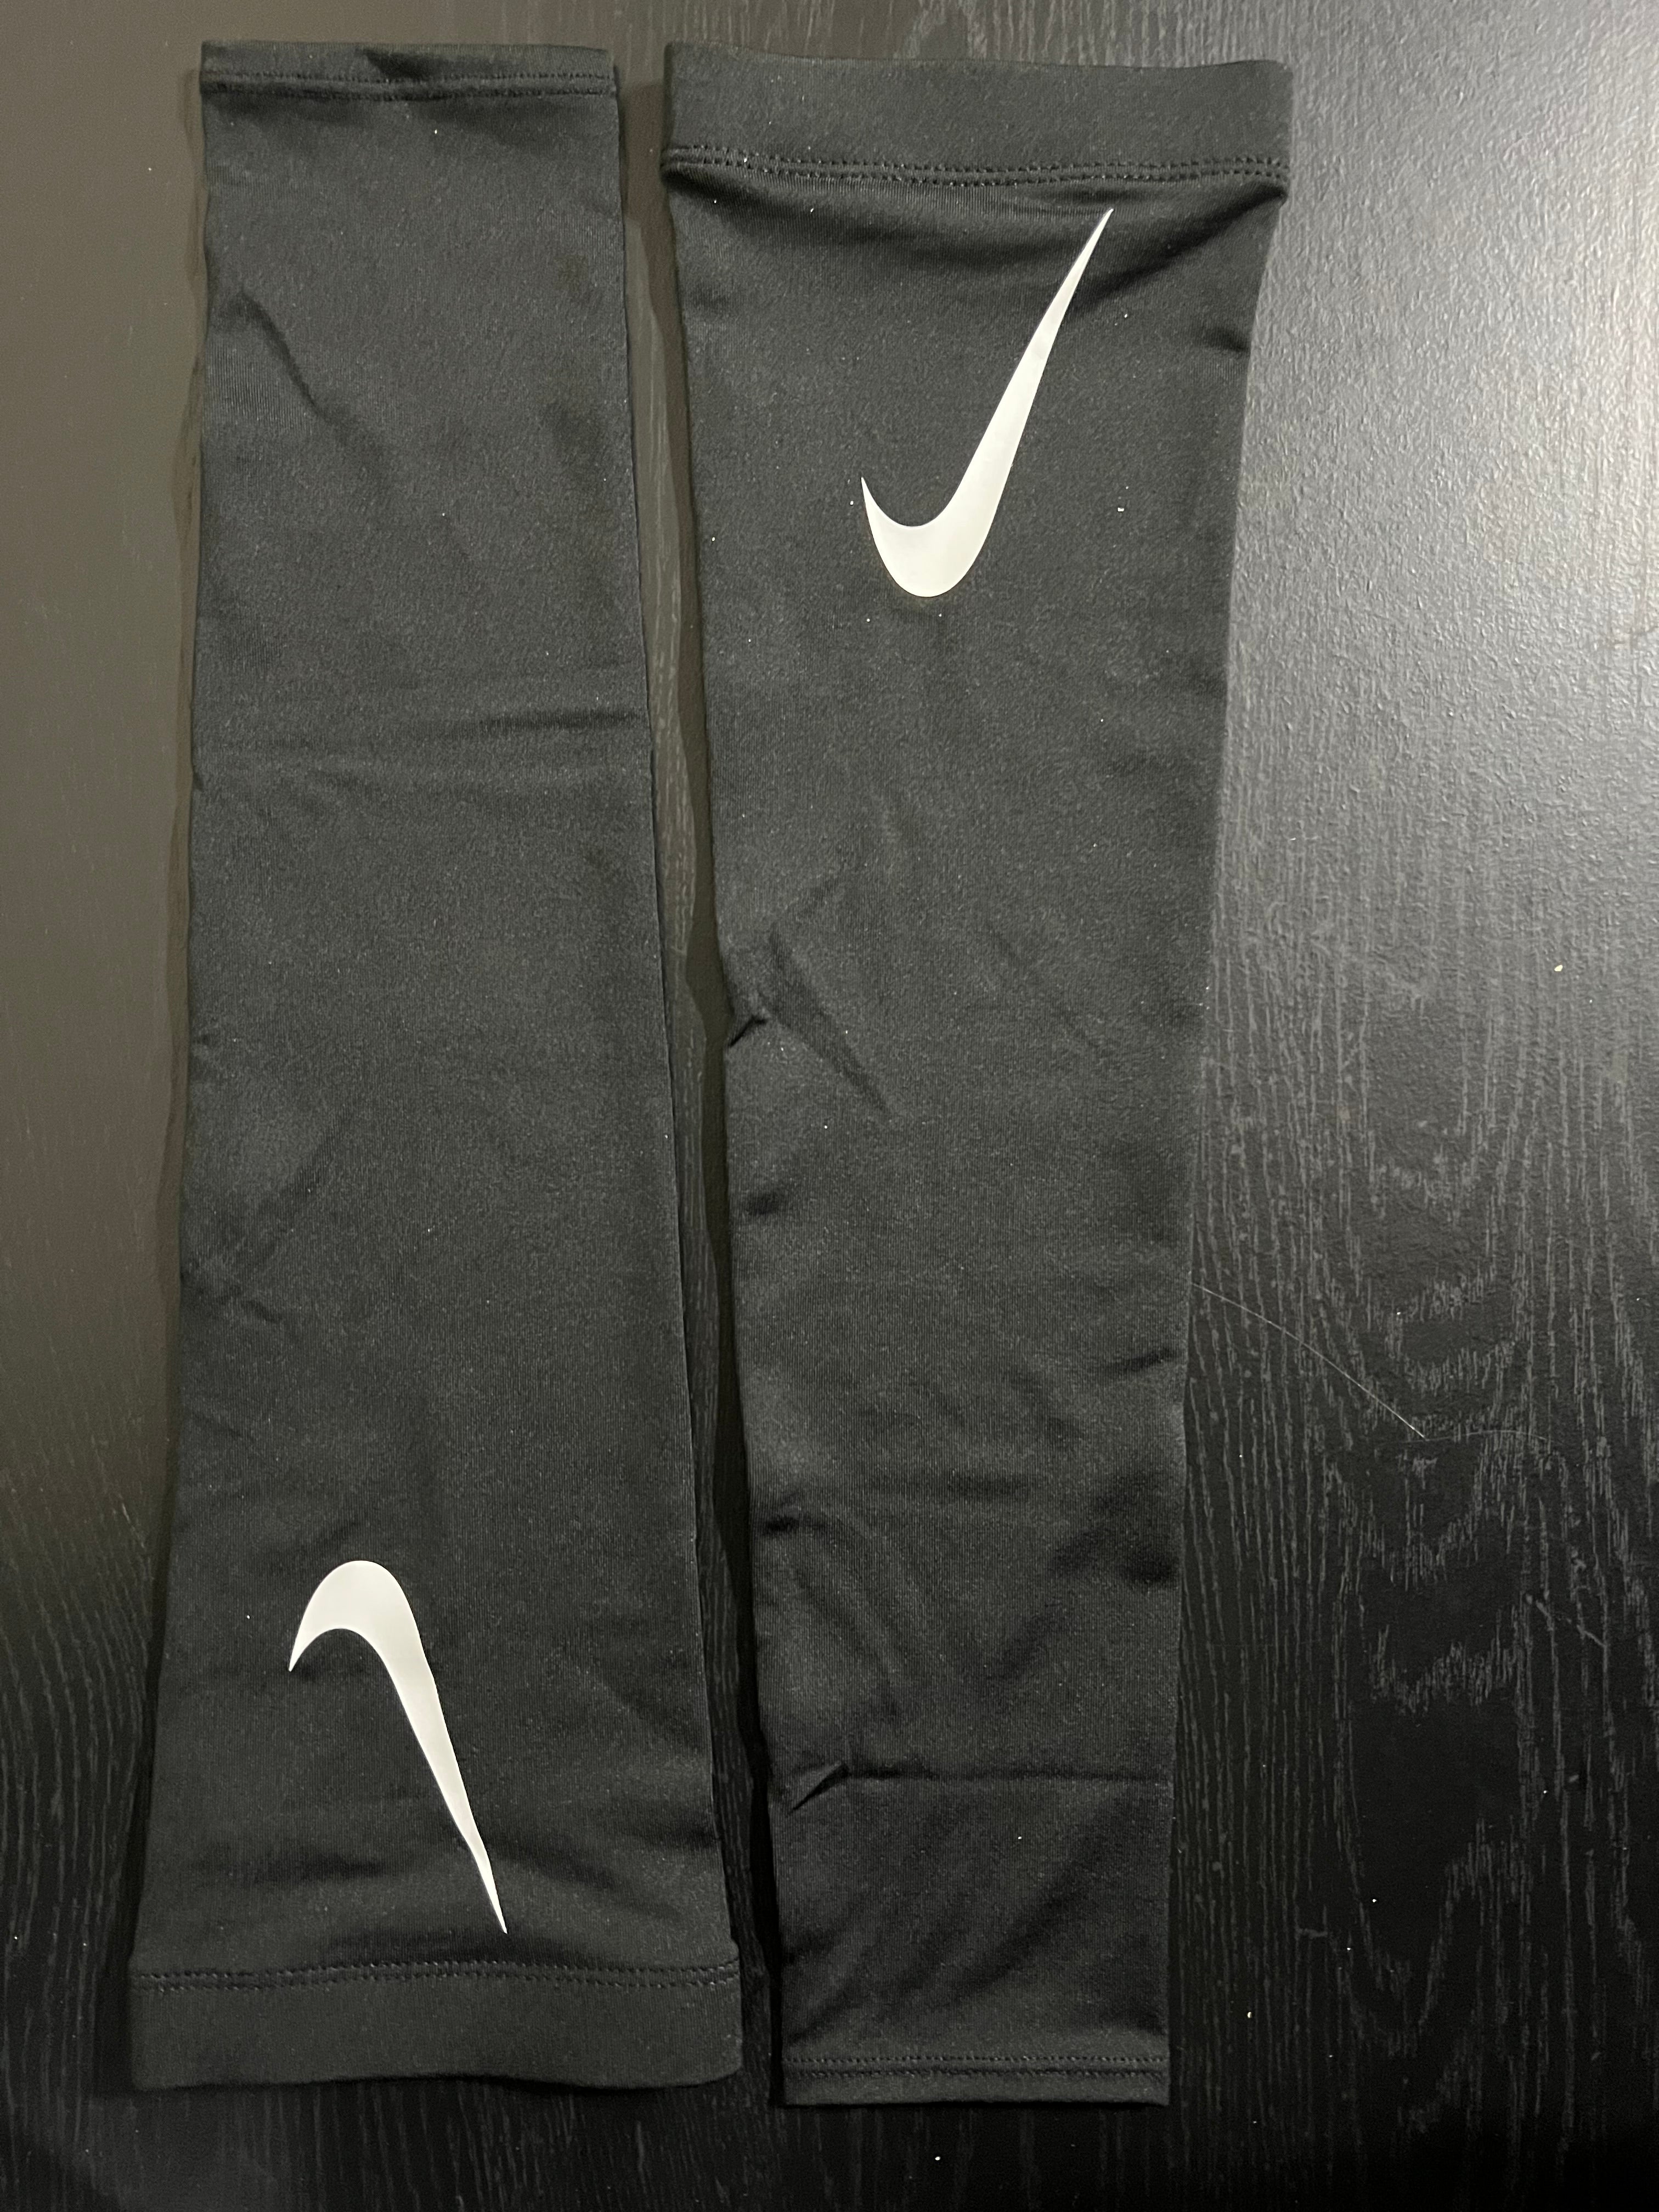 Nike Adults' Nike Pro Strong Leg Sleeves